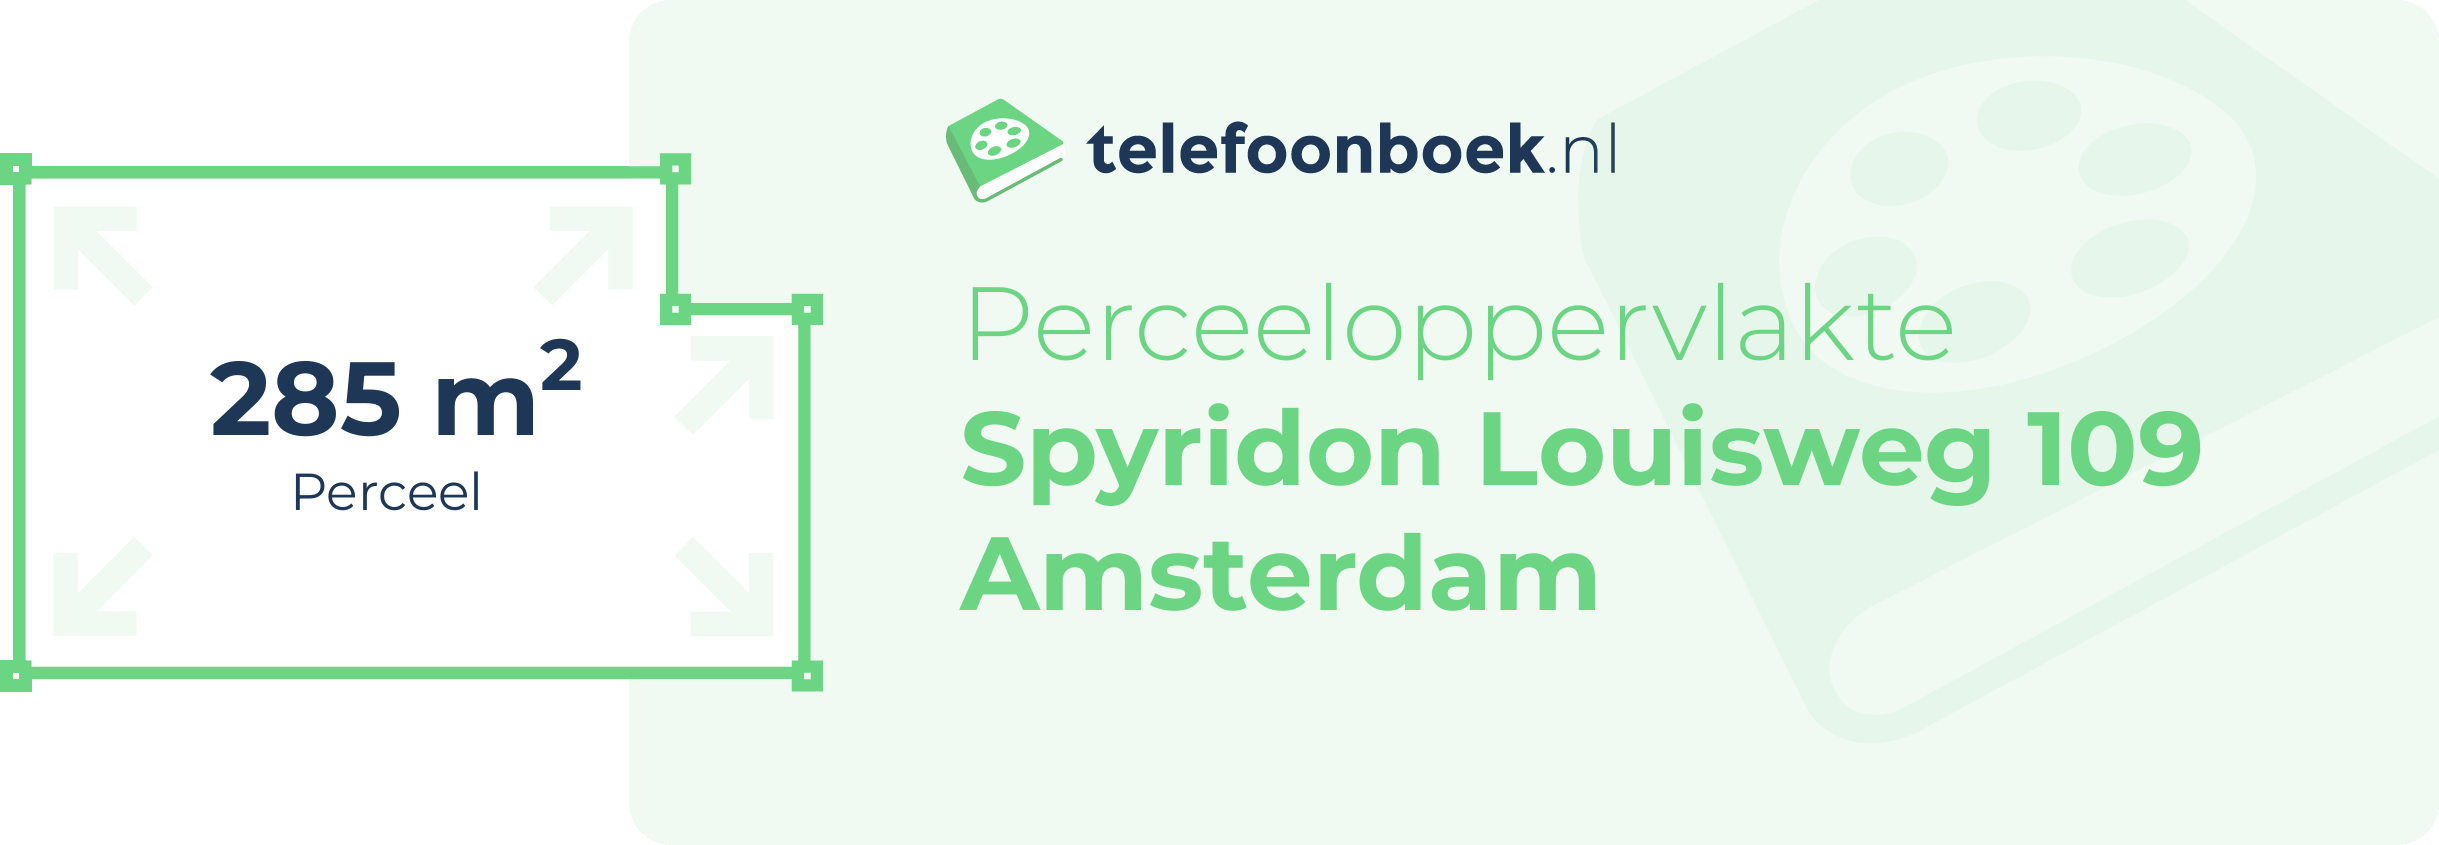 Perceeloppervlakte Spyridon Louisweg 109 Amsterdam